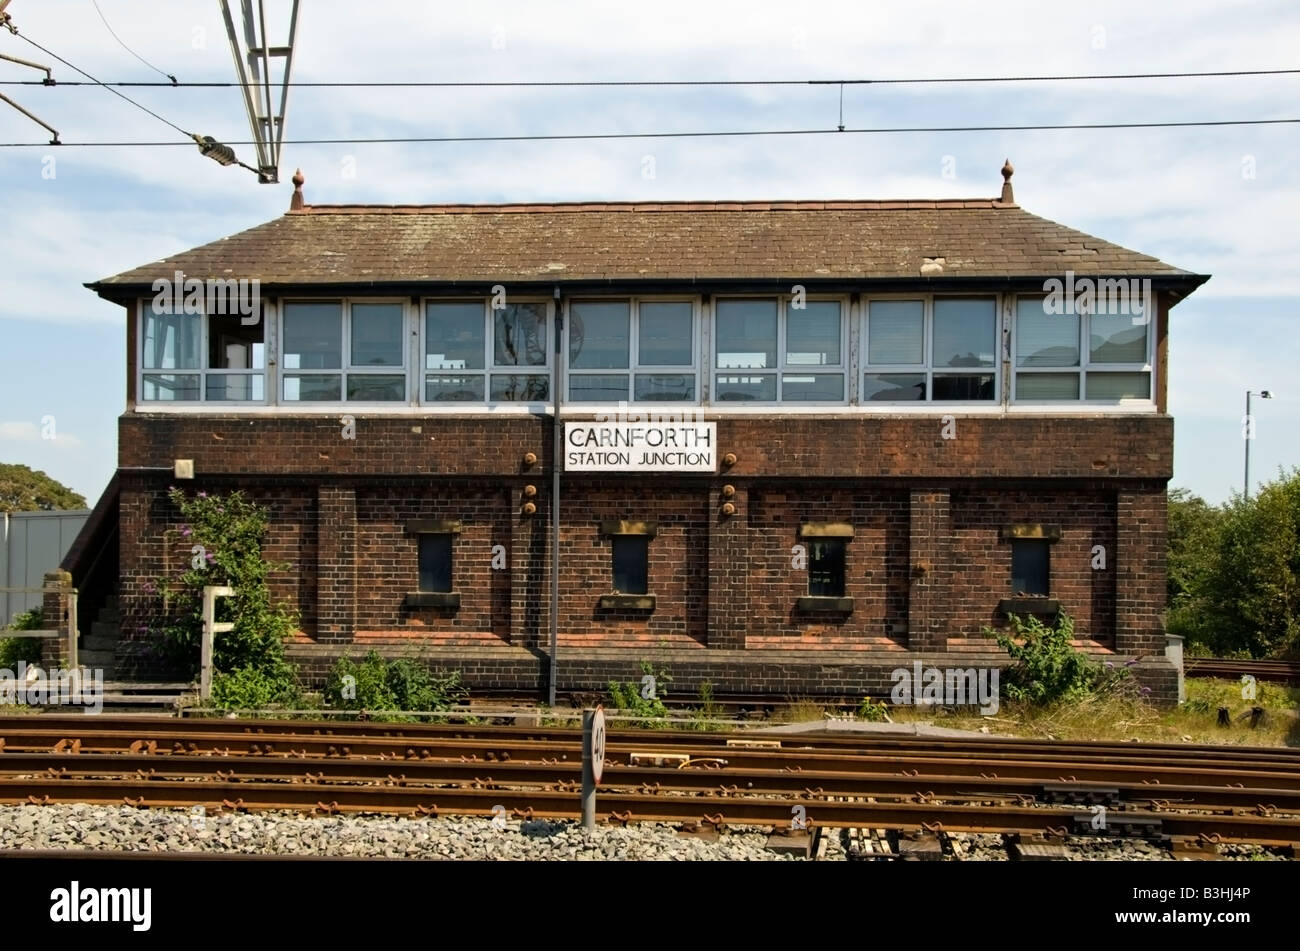 Carnforth Station Junction Signalbox, Carnforth, Cumbria, England. Stock Photo